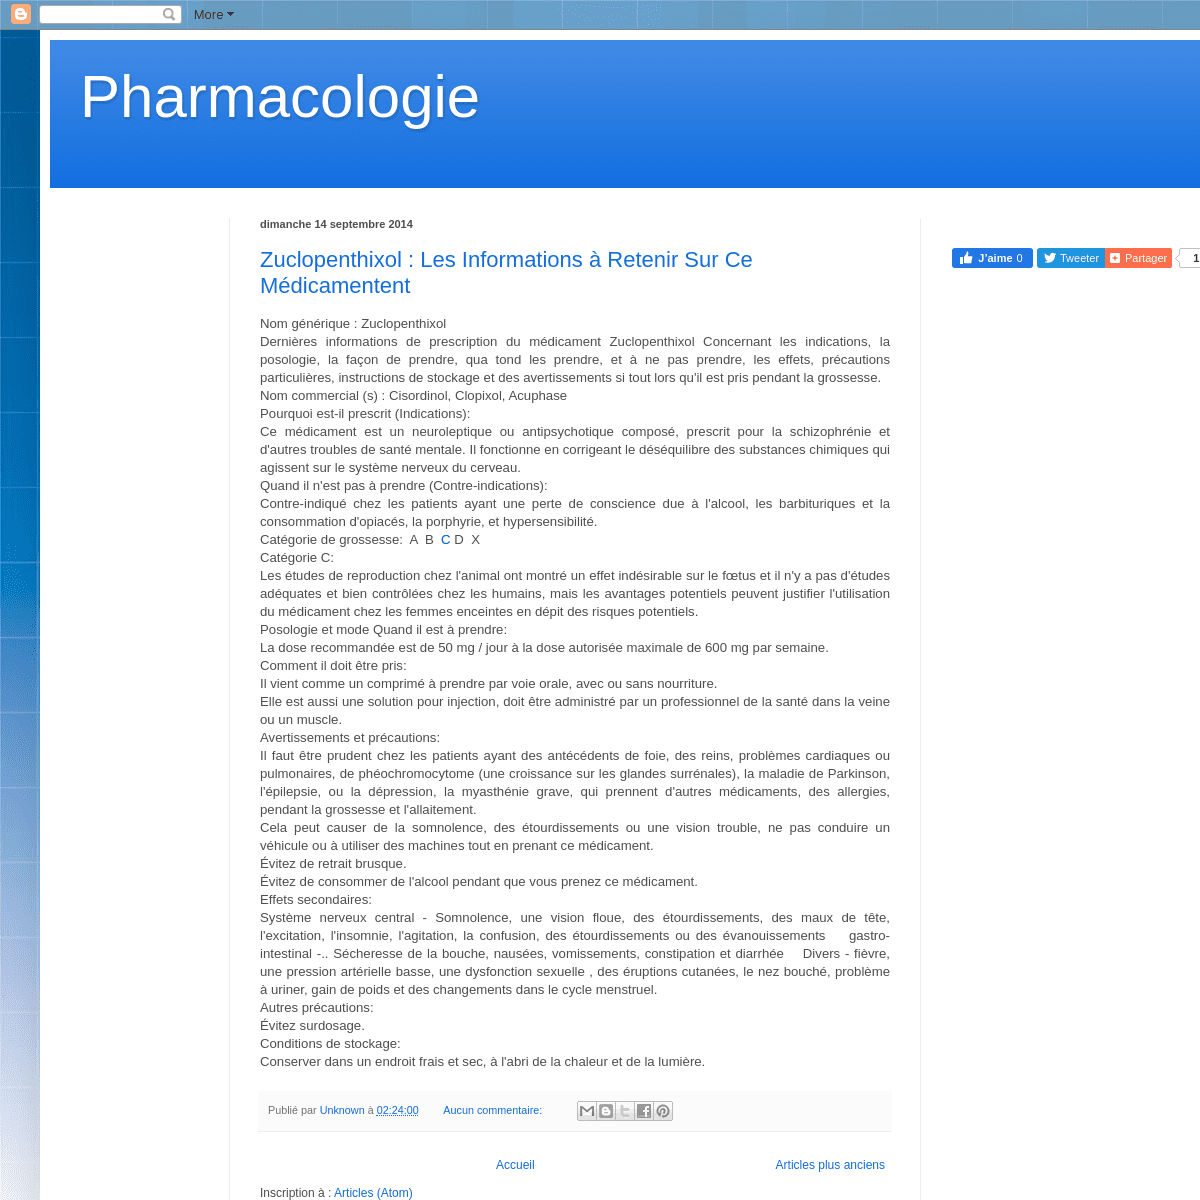 A complete backup of pharmacologie-ici.blogspot.com